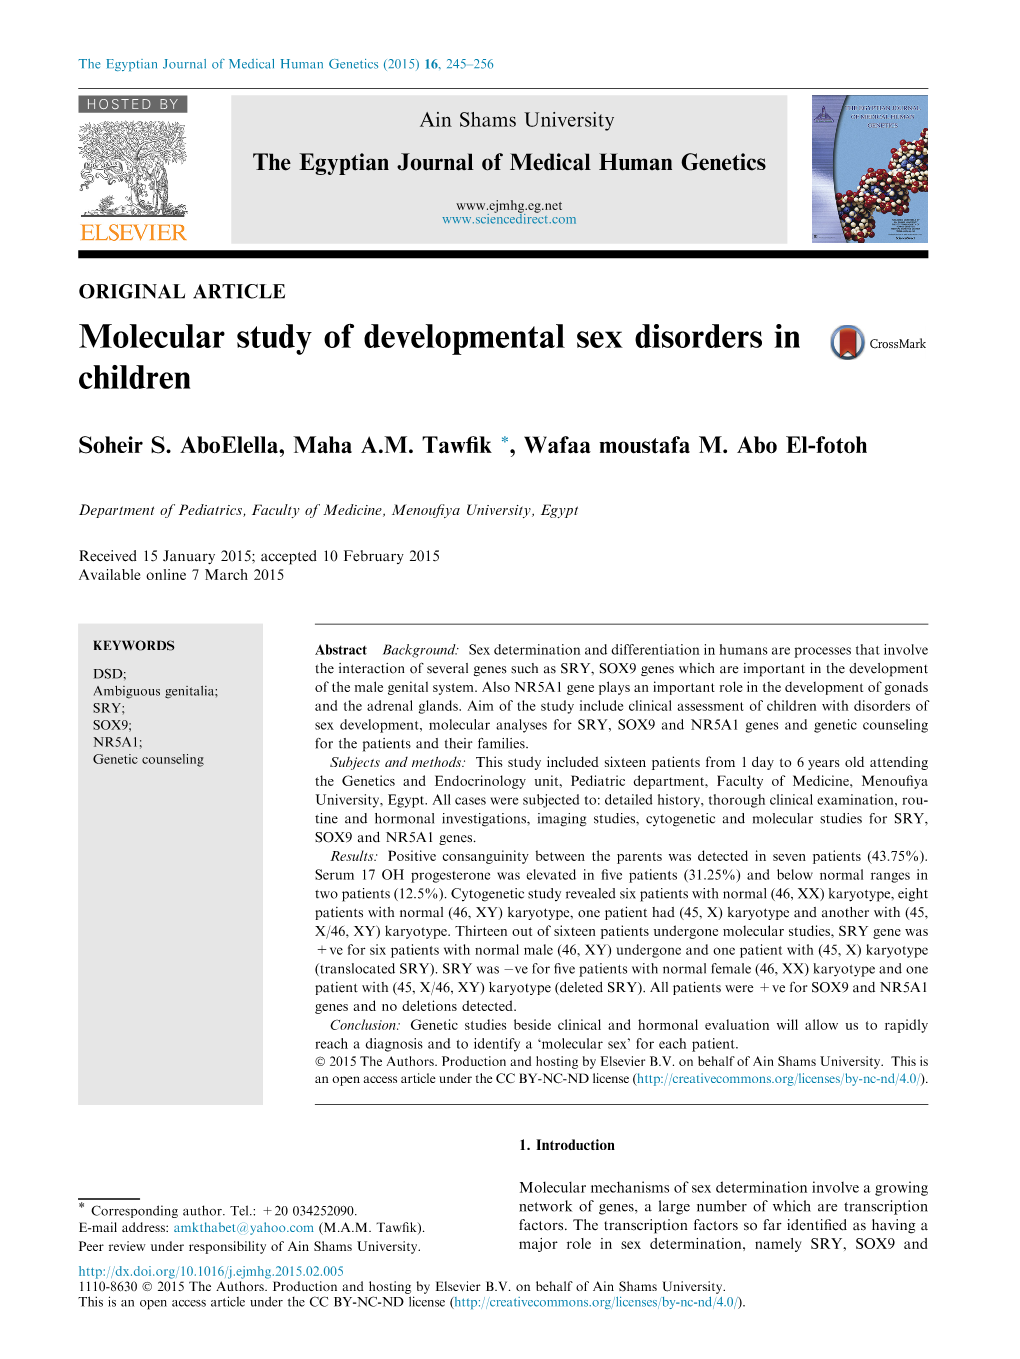 Molecular Study of Developmental Sex Disorders in Children